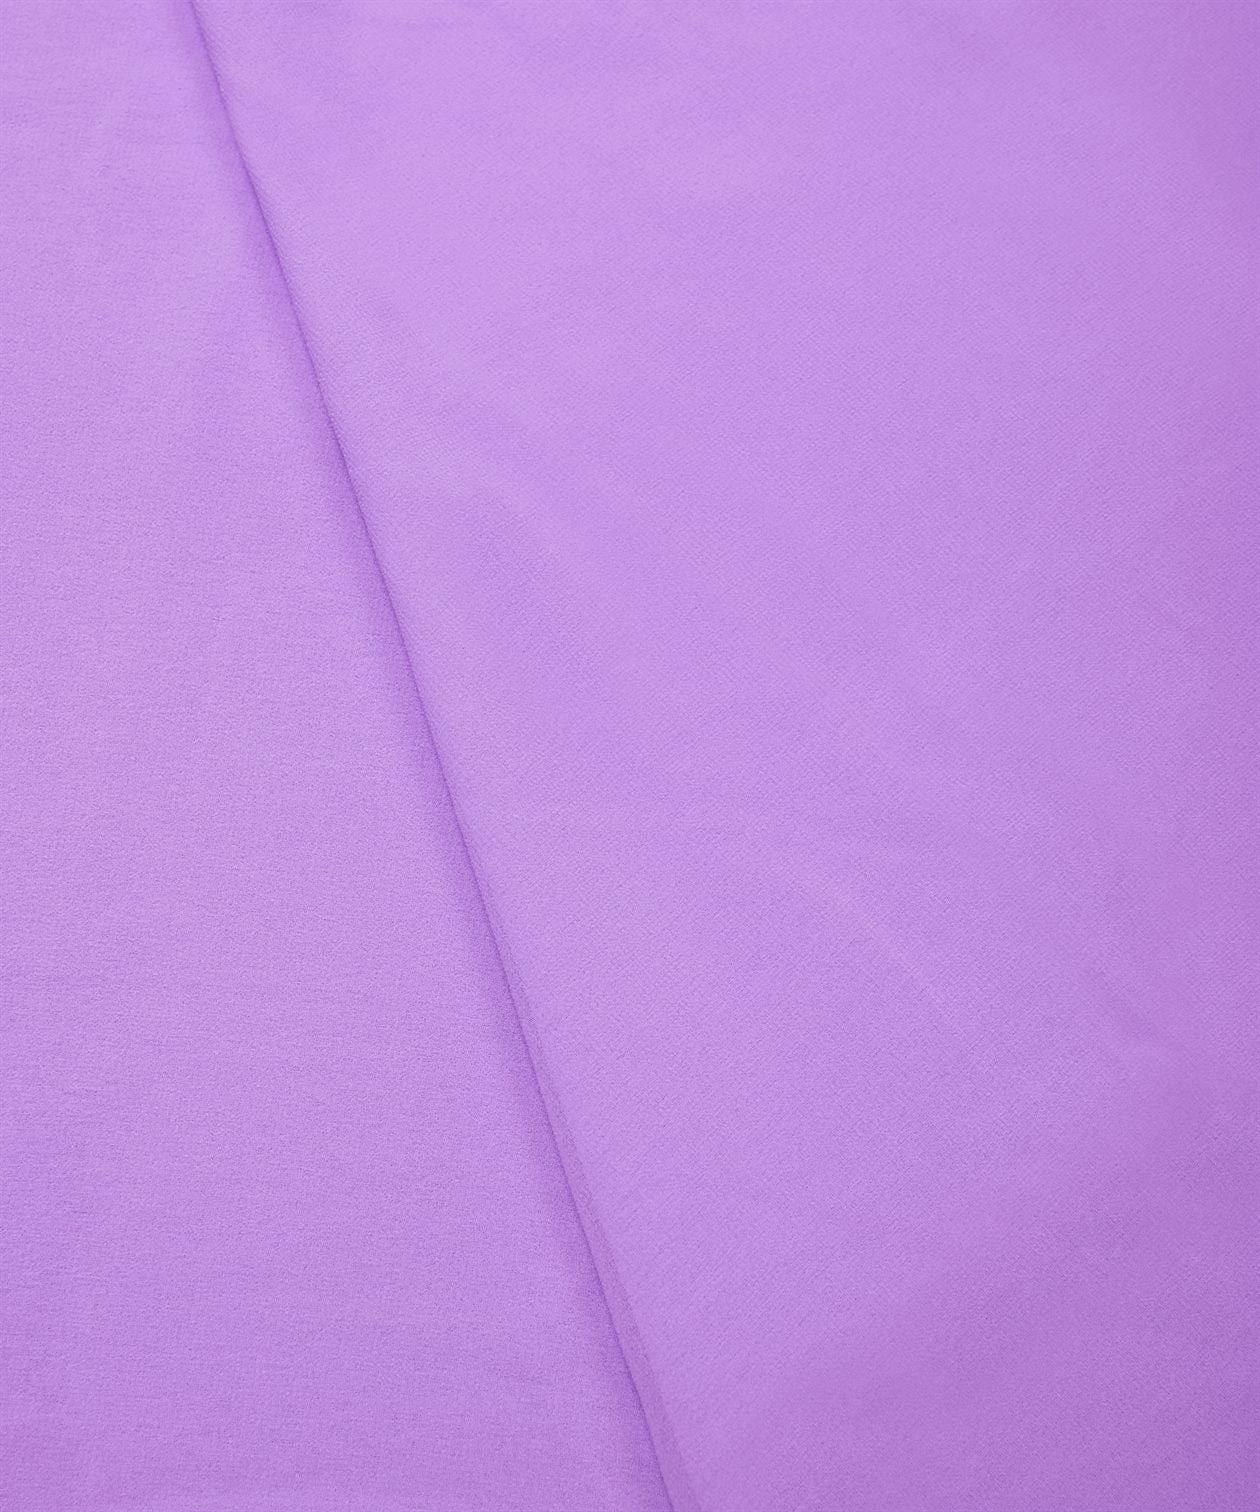 Light Lavender Plain Dyed Georgette (60 Grams) Fabric